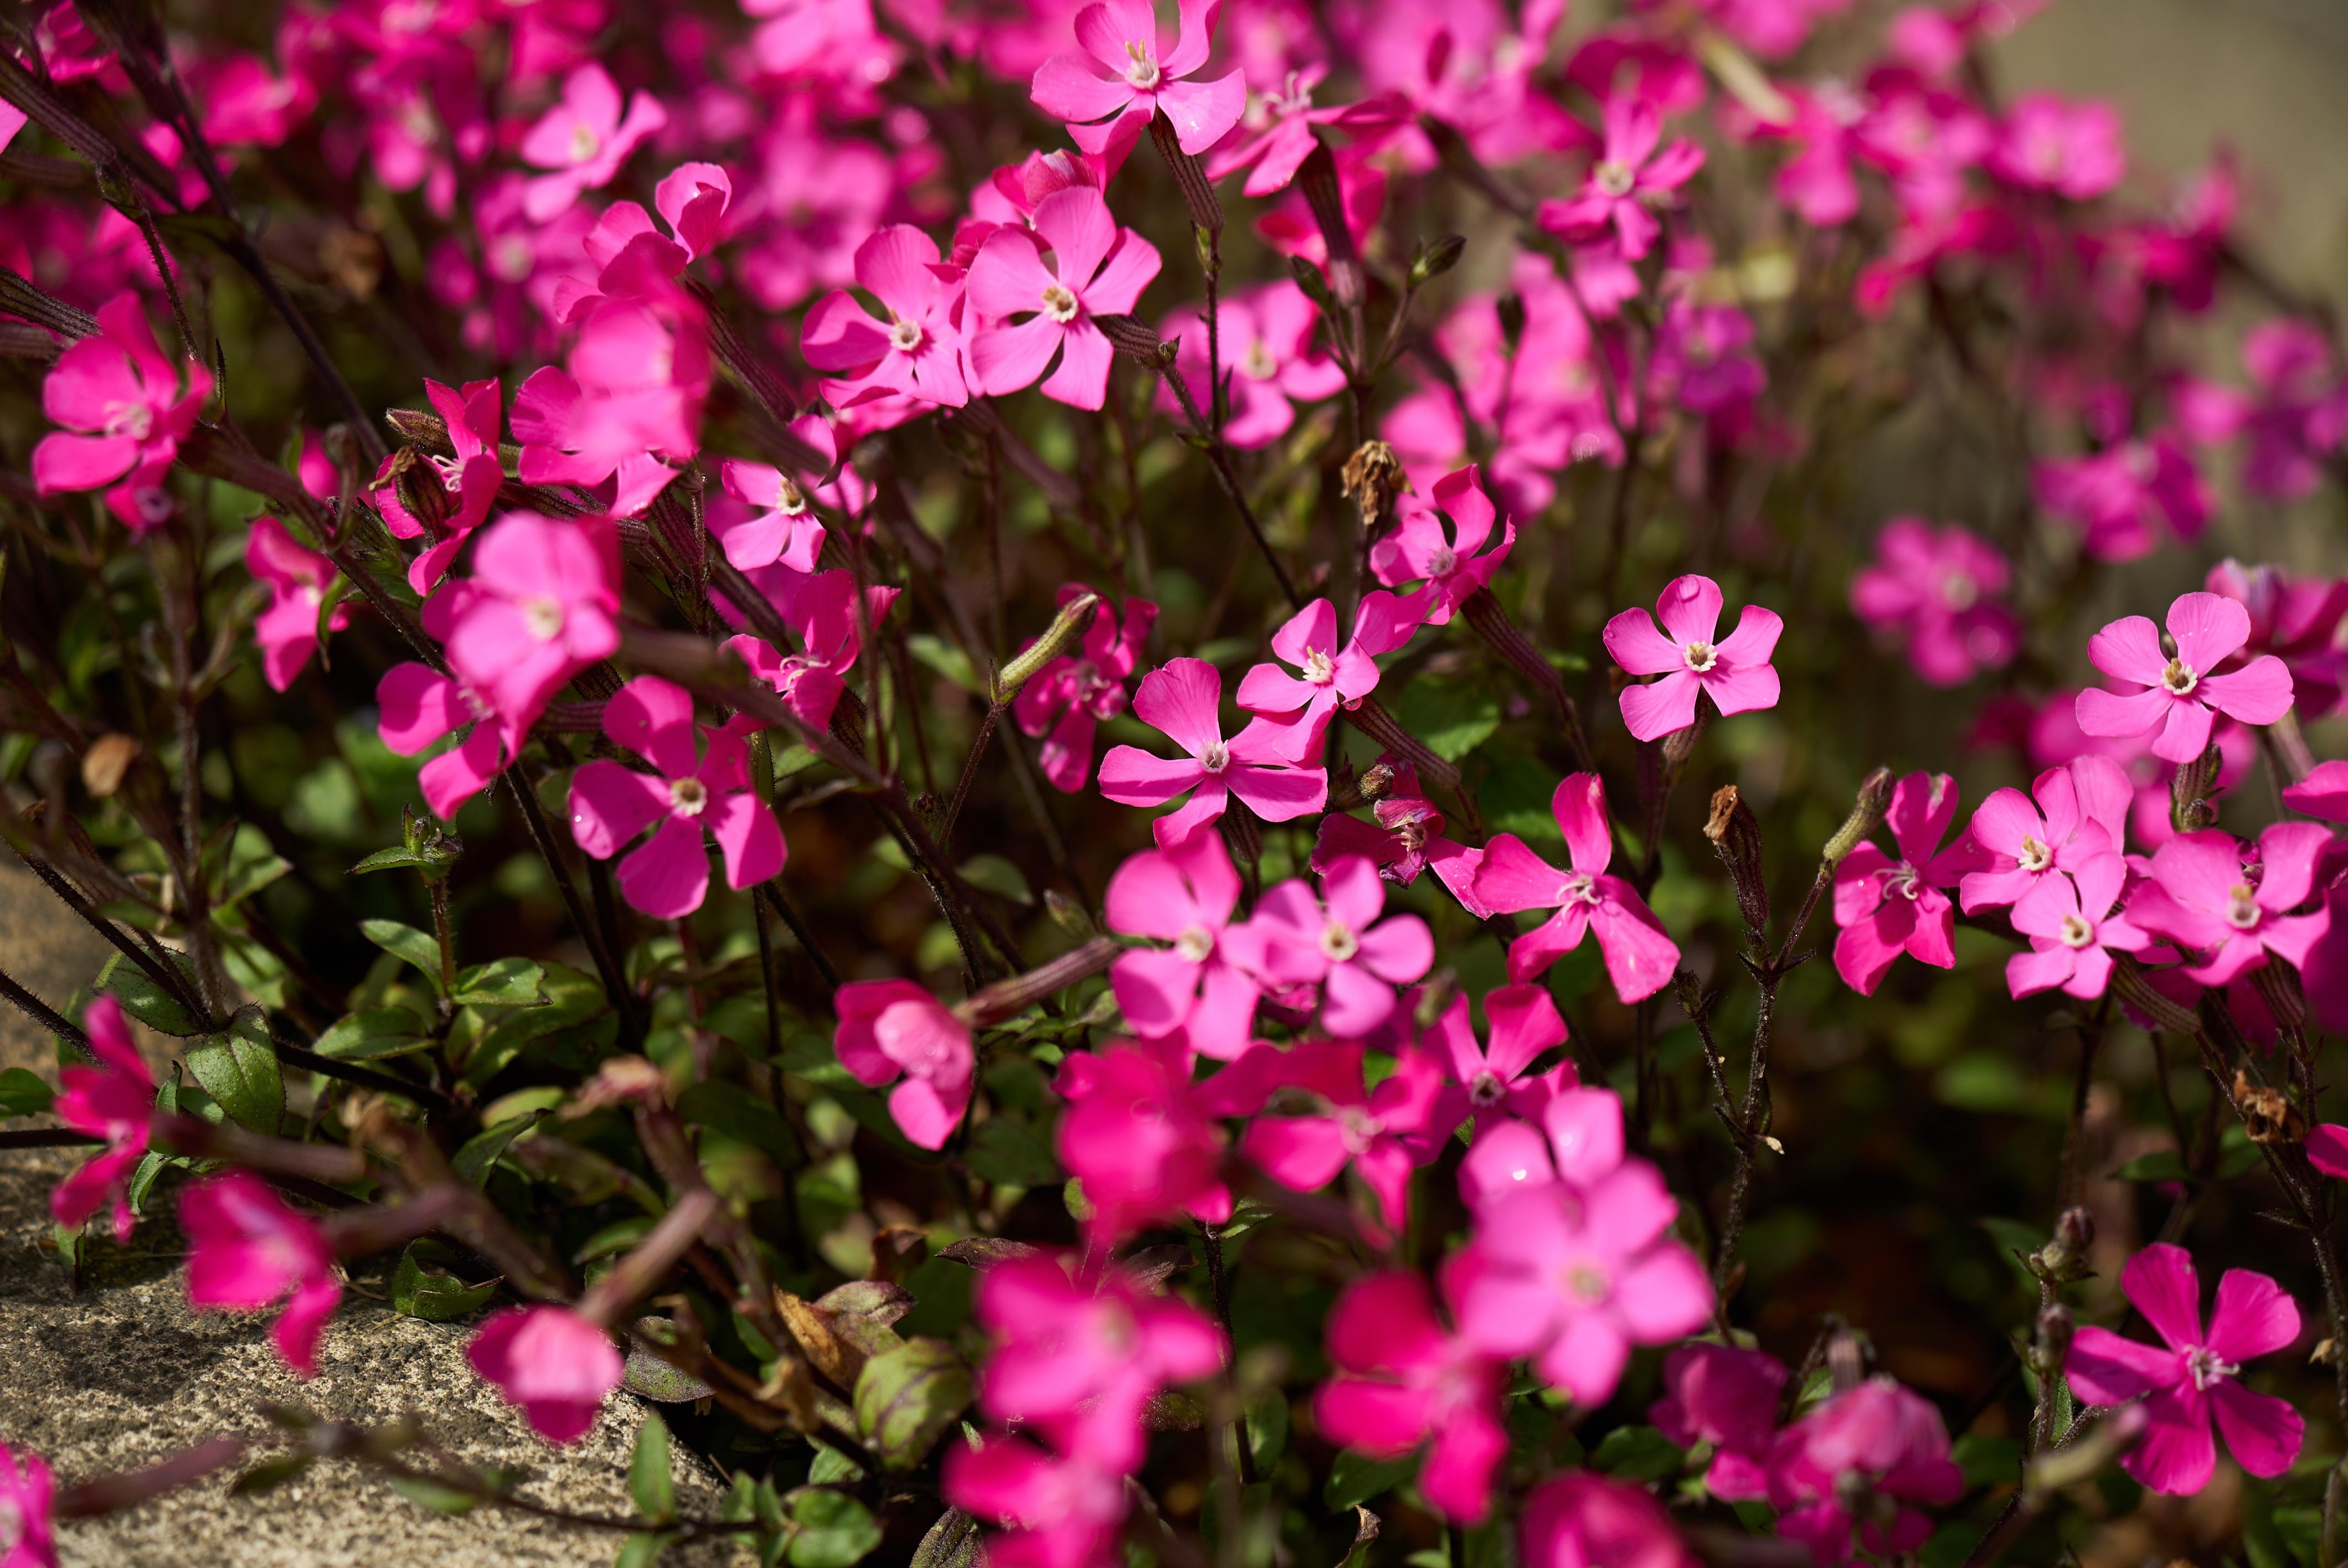 Pink flowers called Phlox Subulate (Moss Phlox)